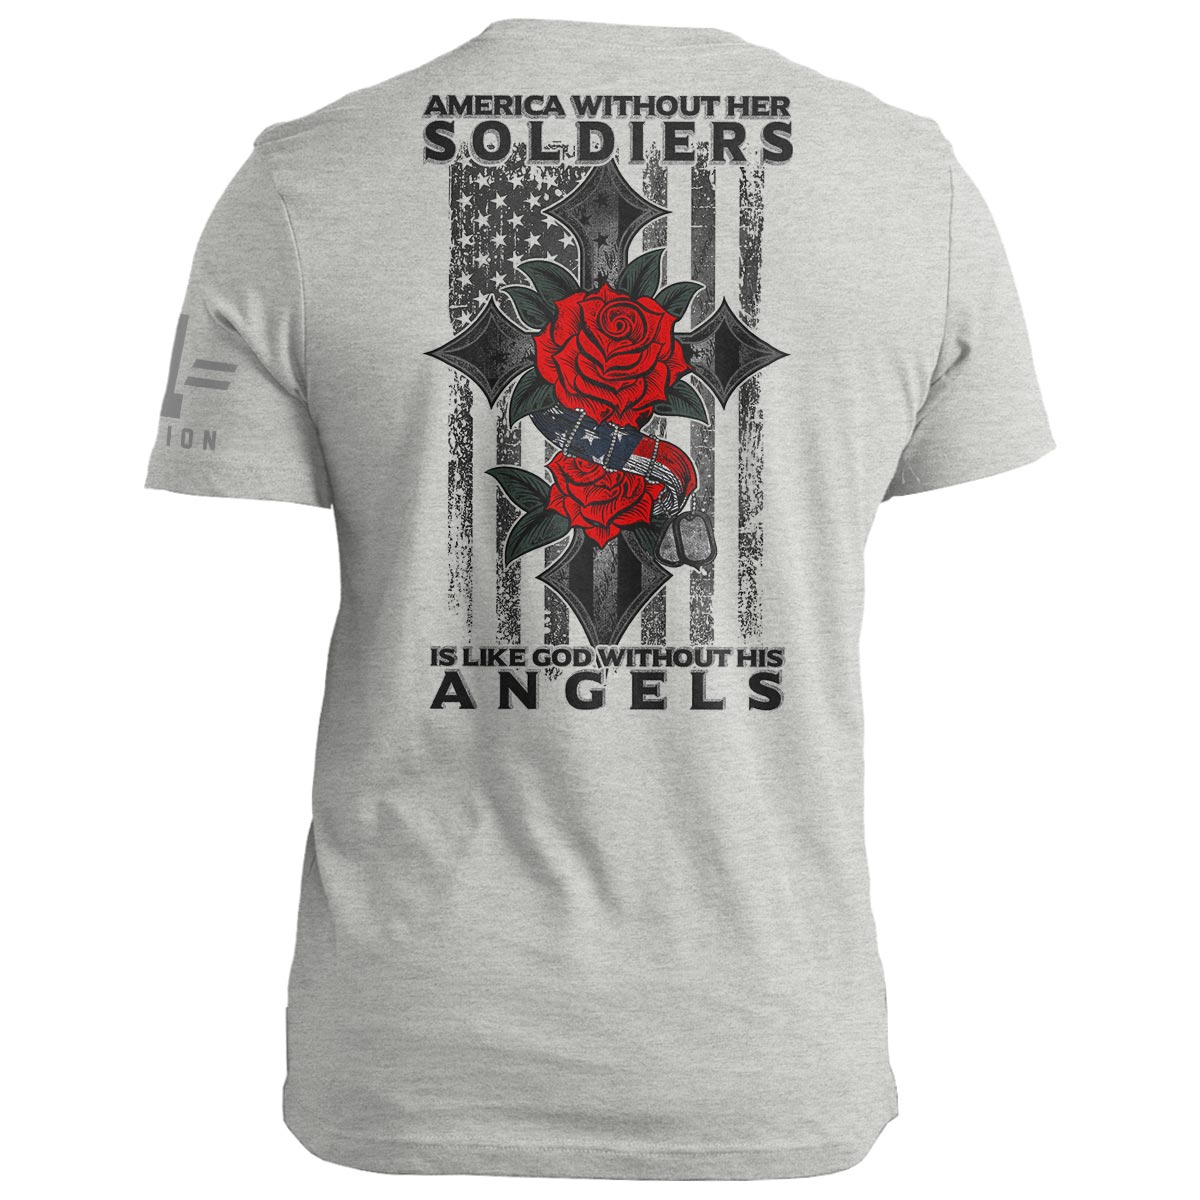 American Soldiers: ANGELS